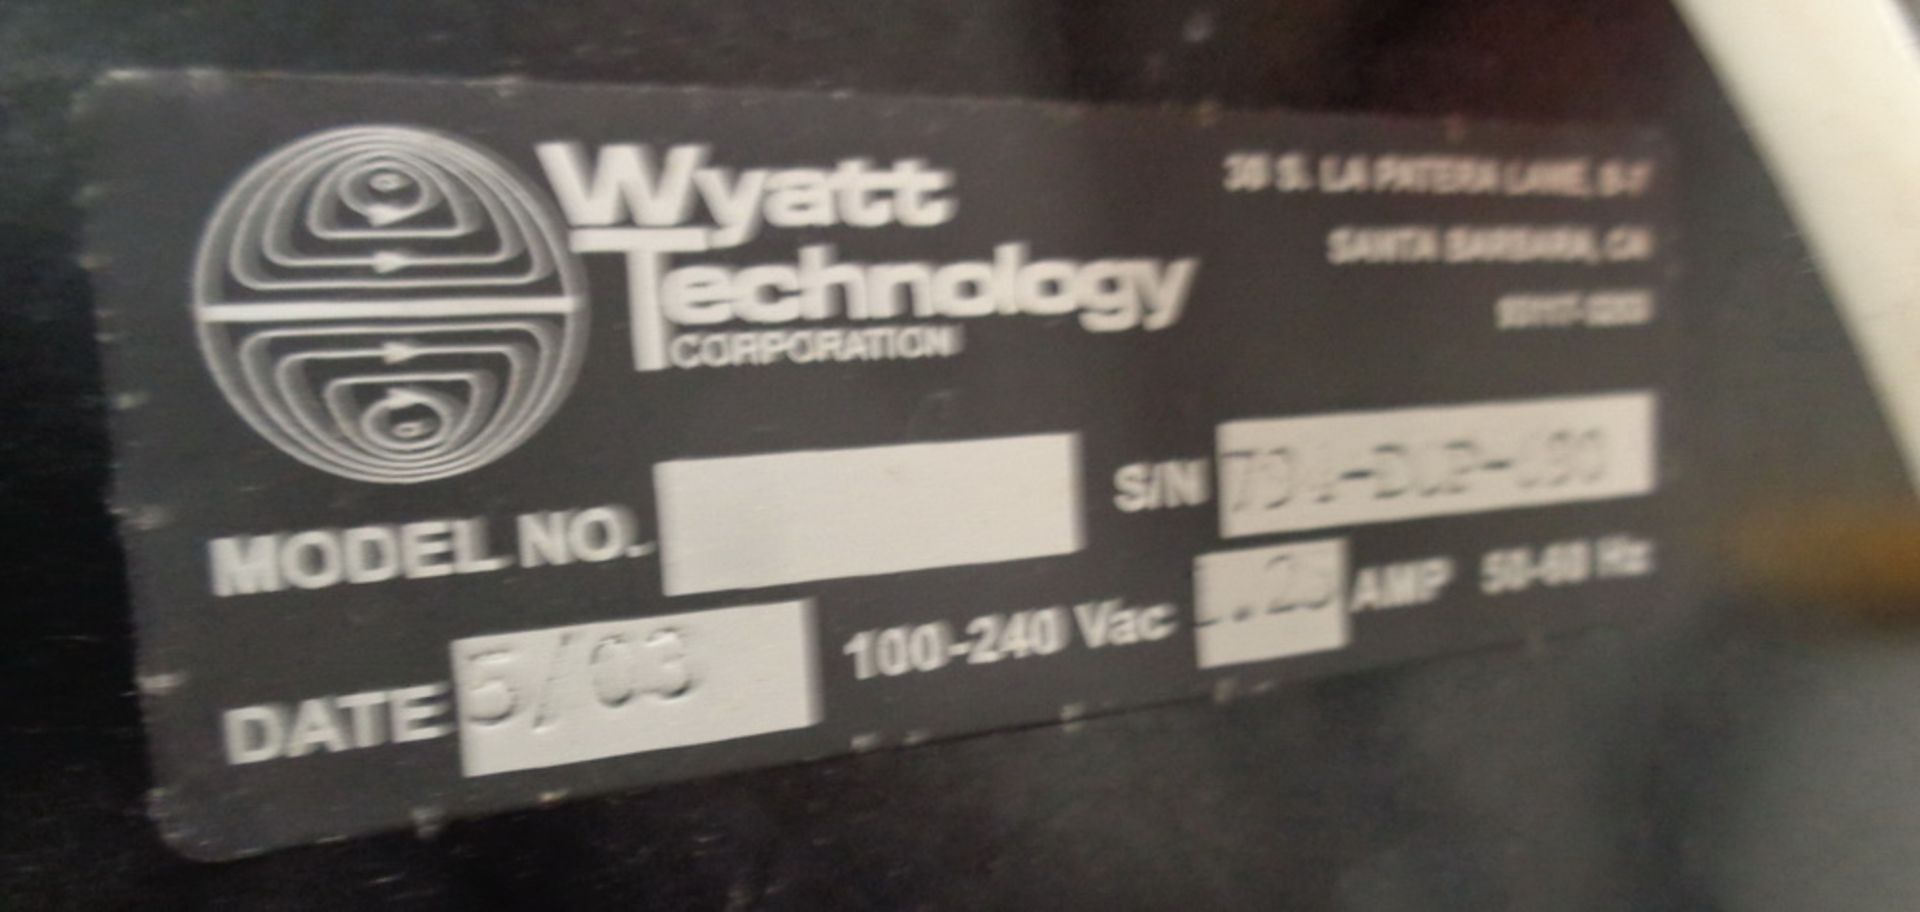 Wyatt Technology Optical System/Refractometer - Image 5 of 6